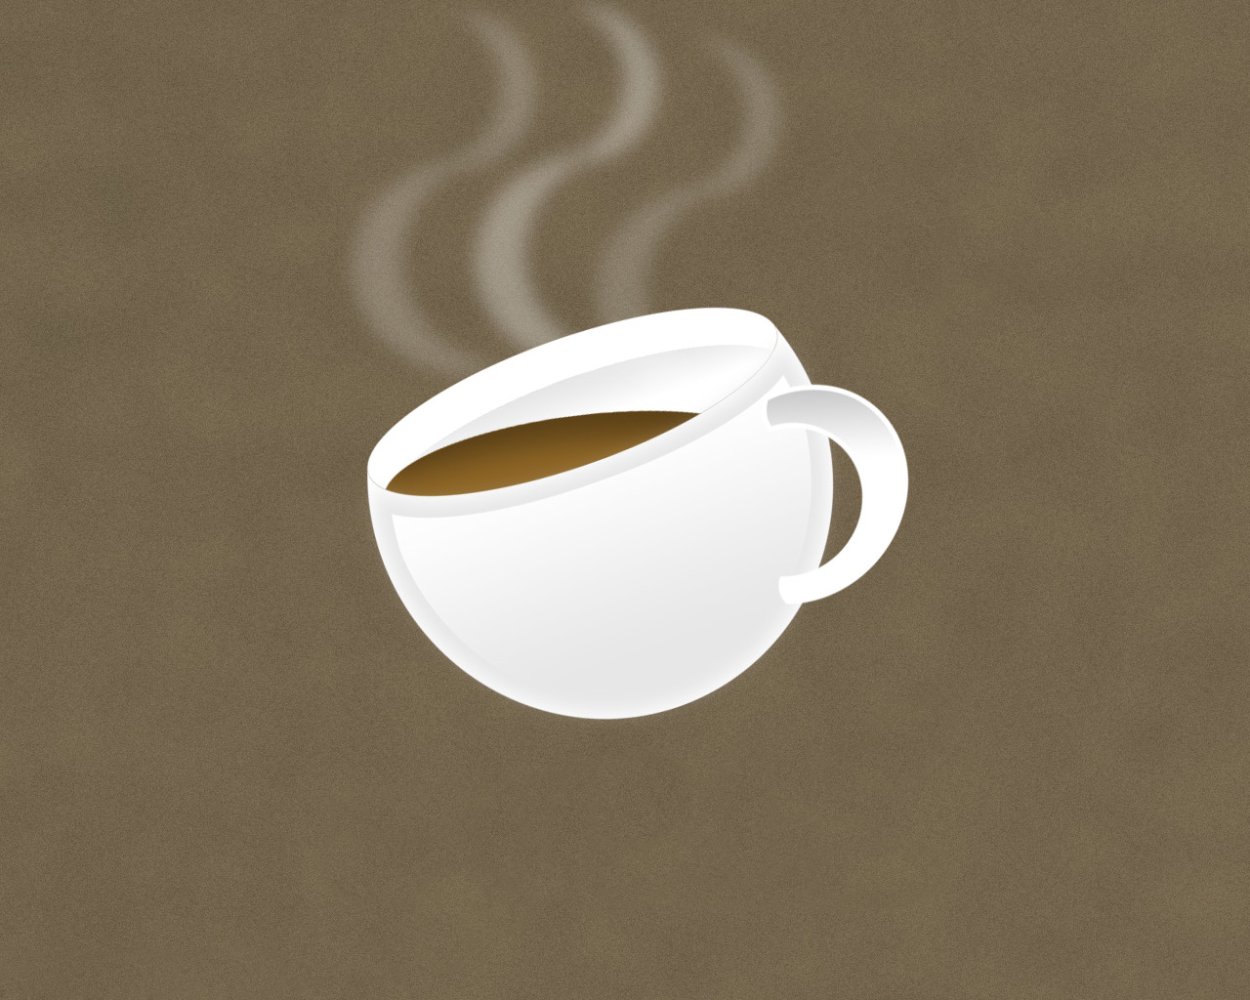 Do a cup of coffee. Кофе Минимализм. Обои Минимализм кофе. Чашка кофе. Минималистичные кружки.